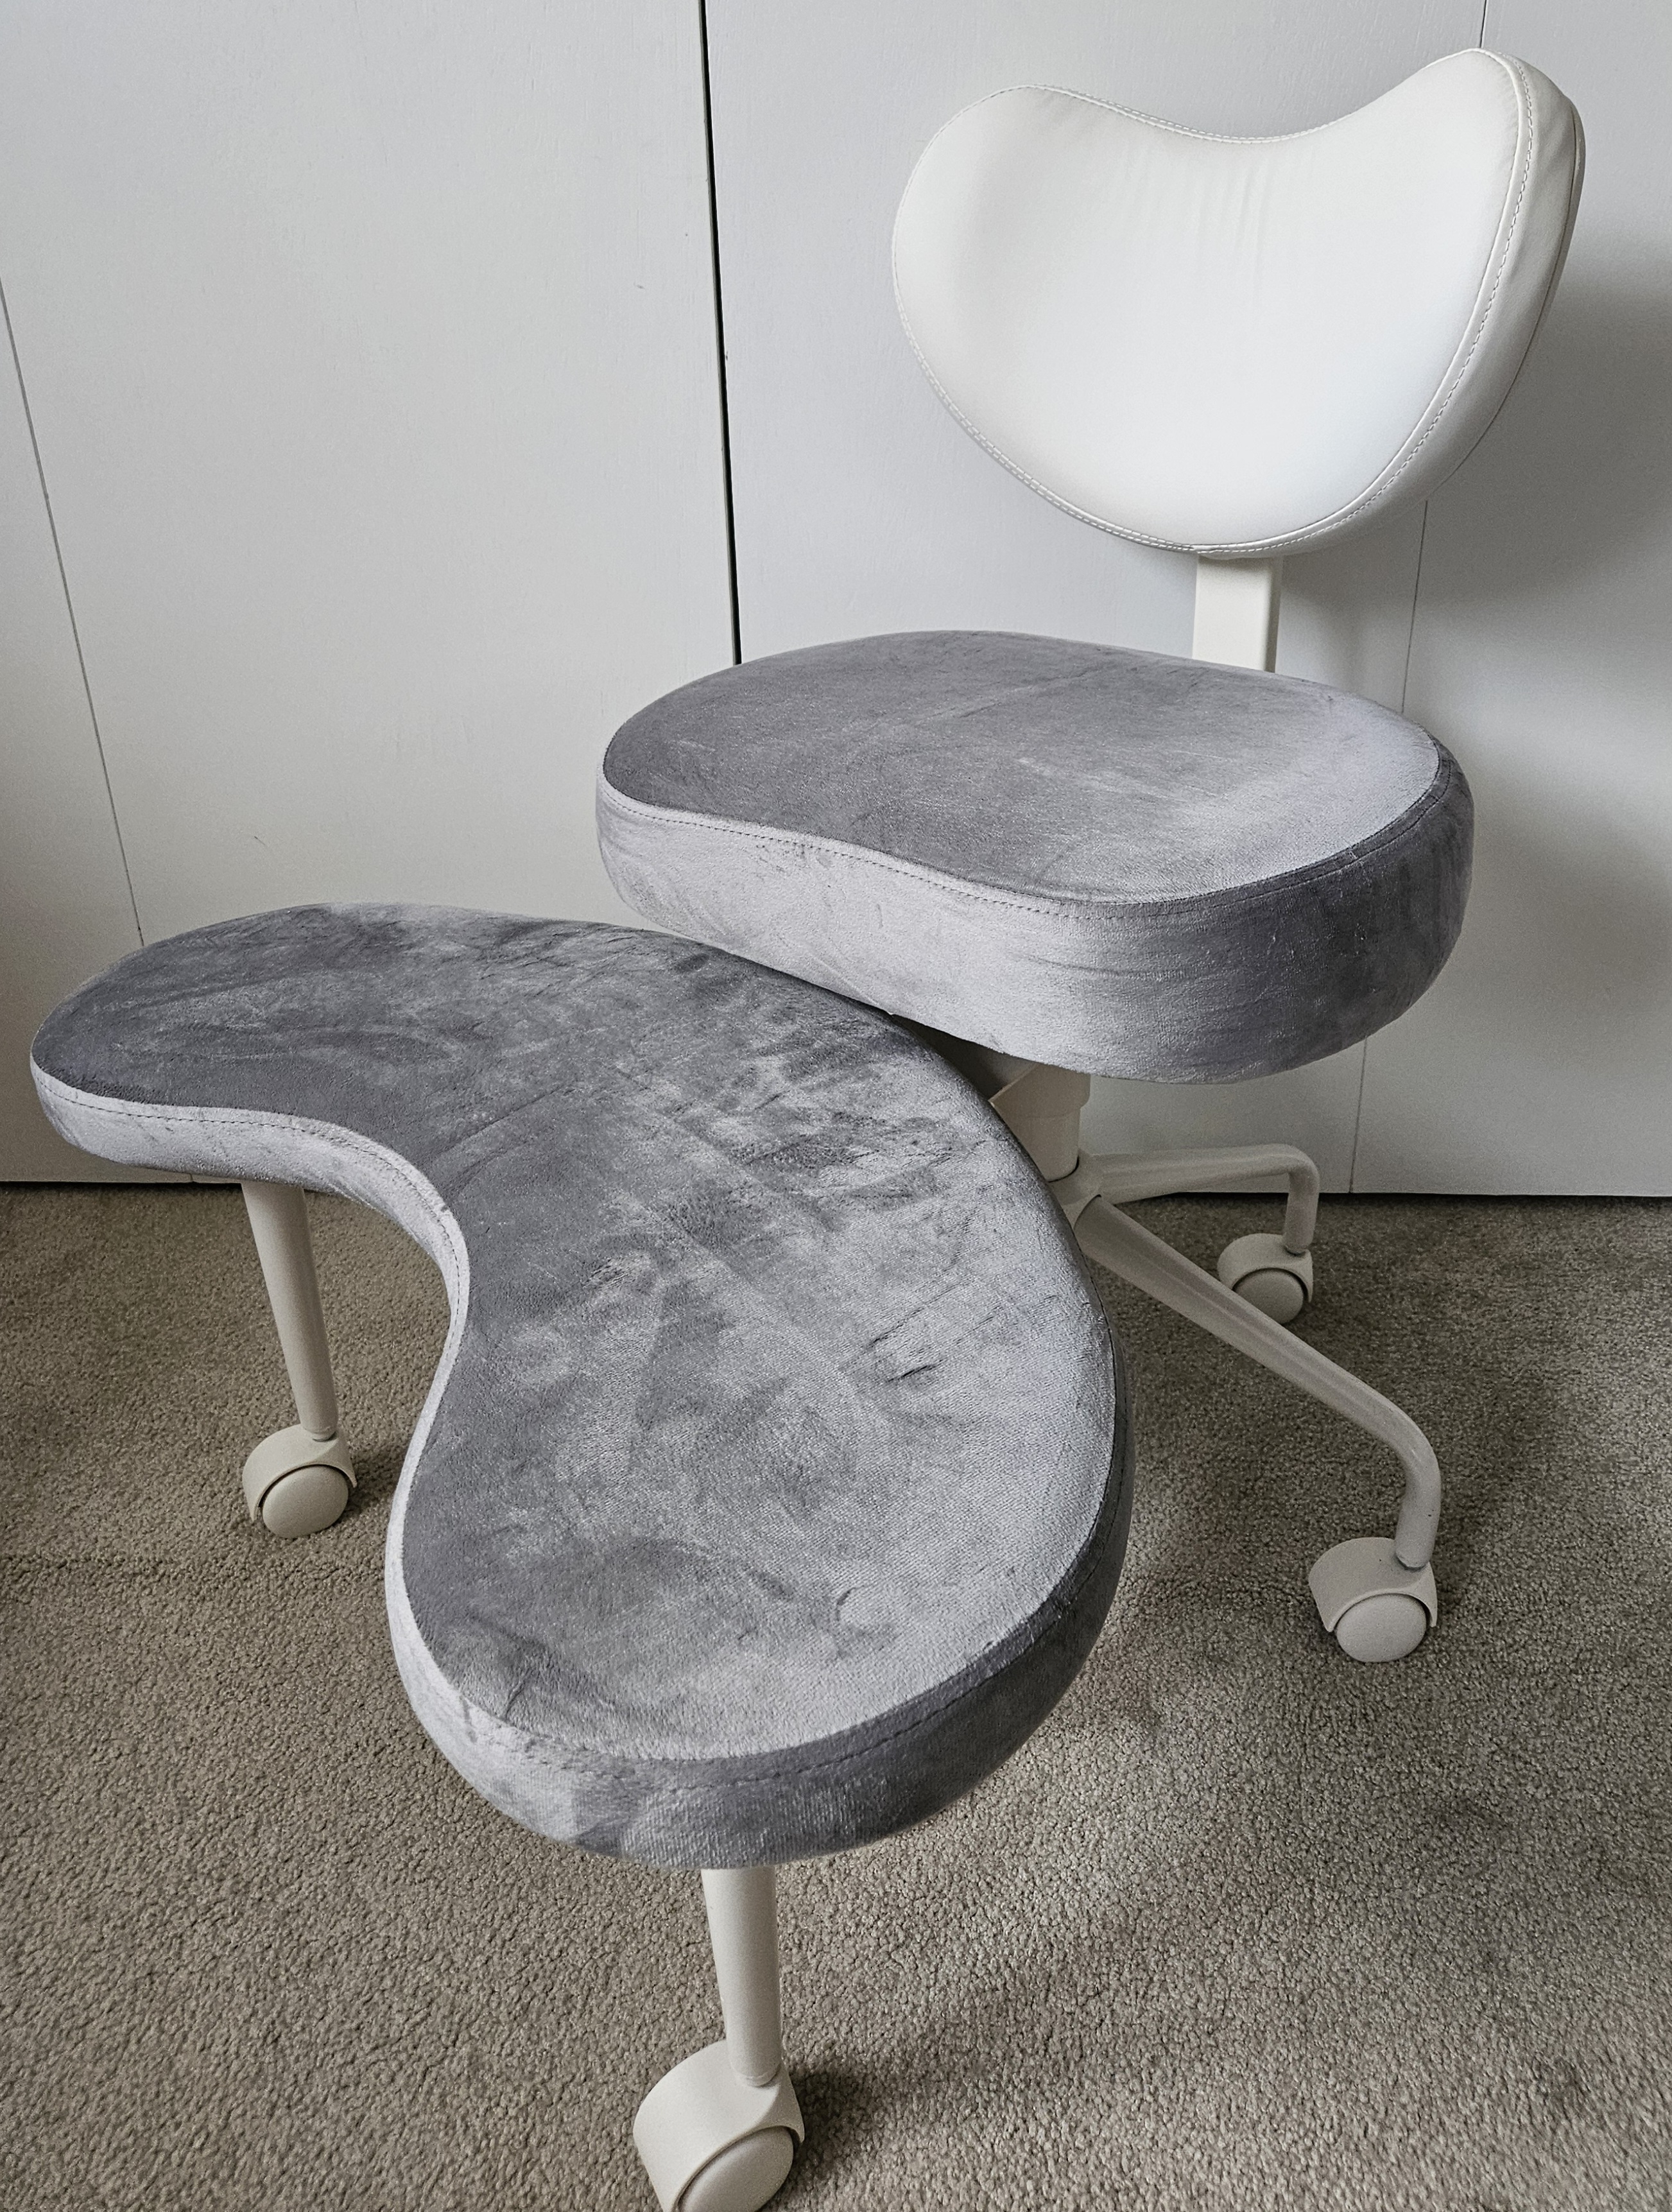 cross legged ergonomic chair Meditation Chair at Oaktafair Chair Store